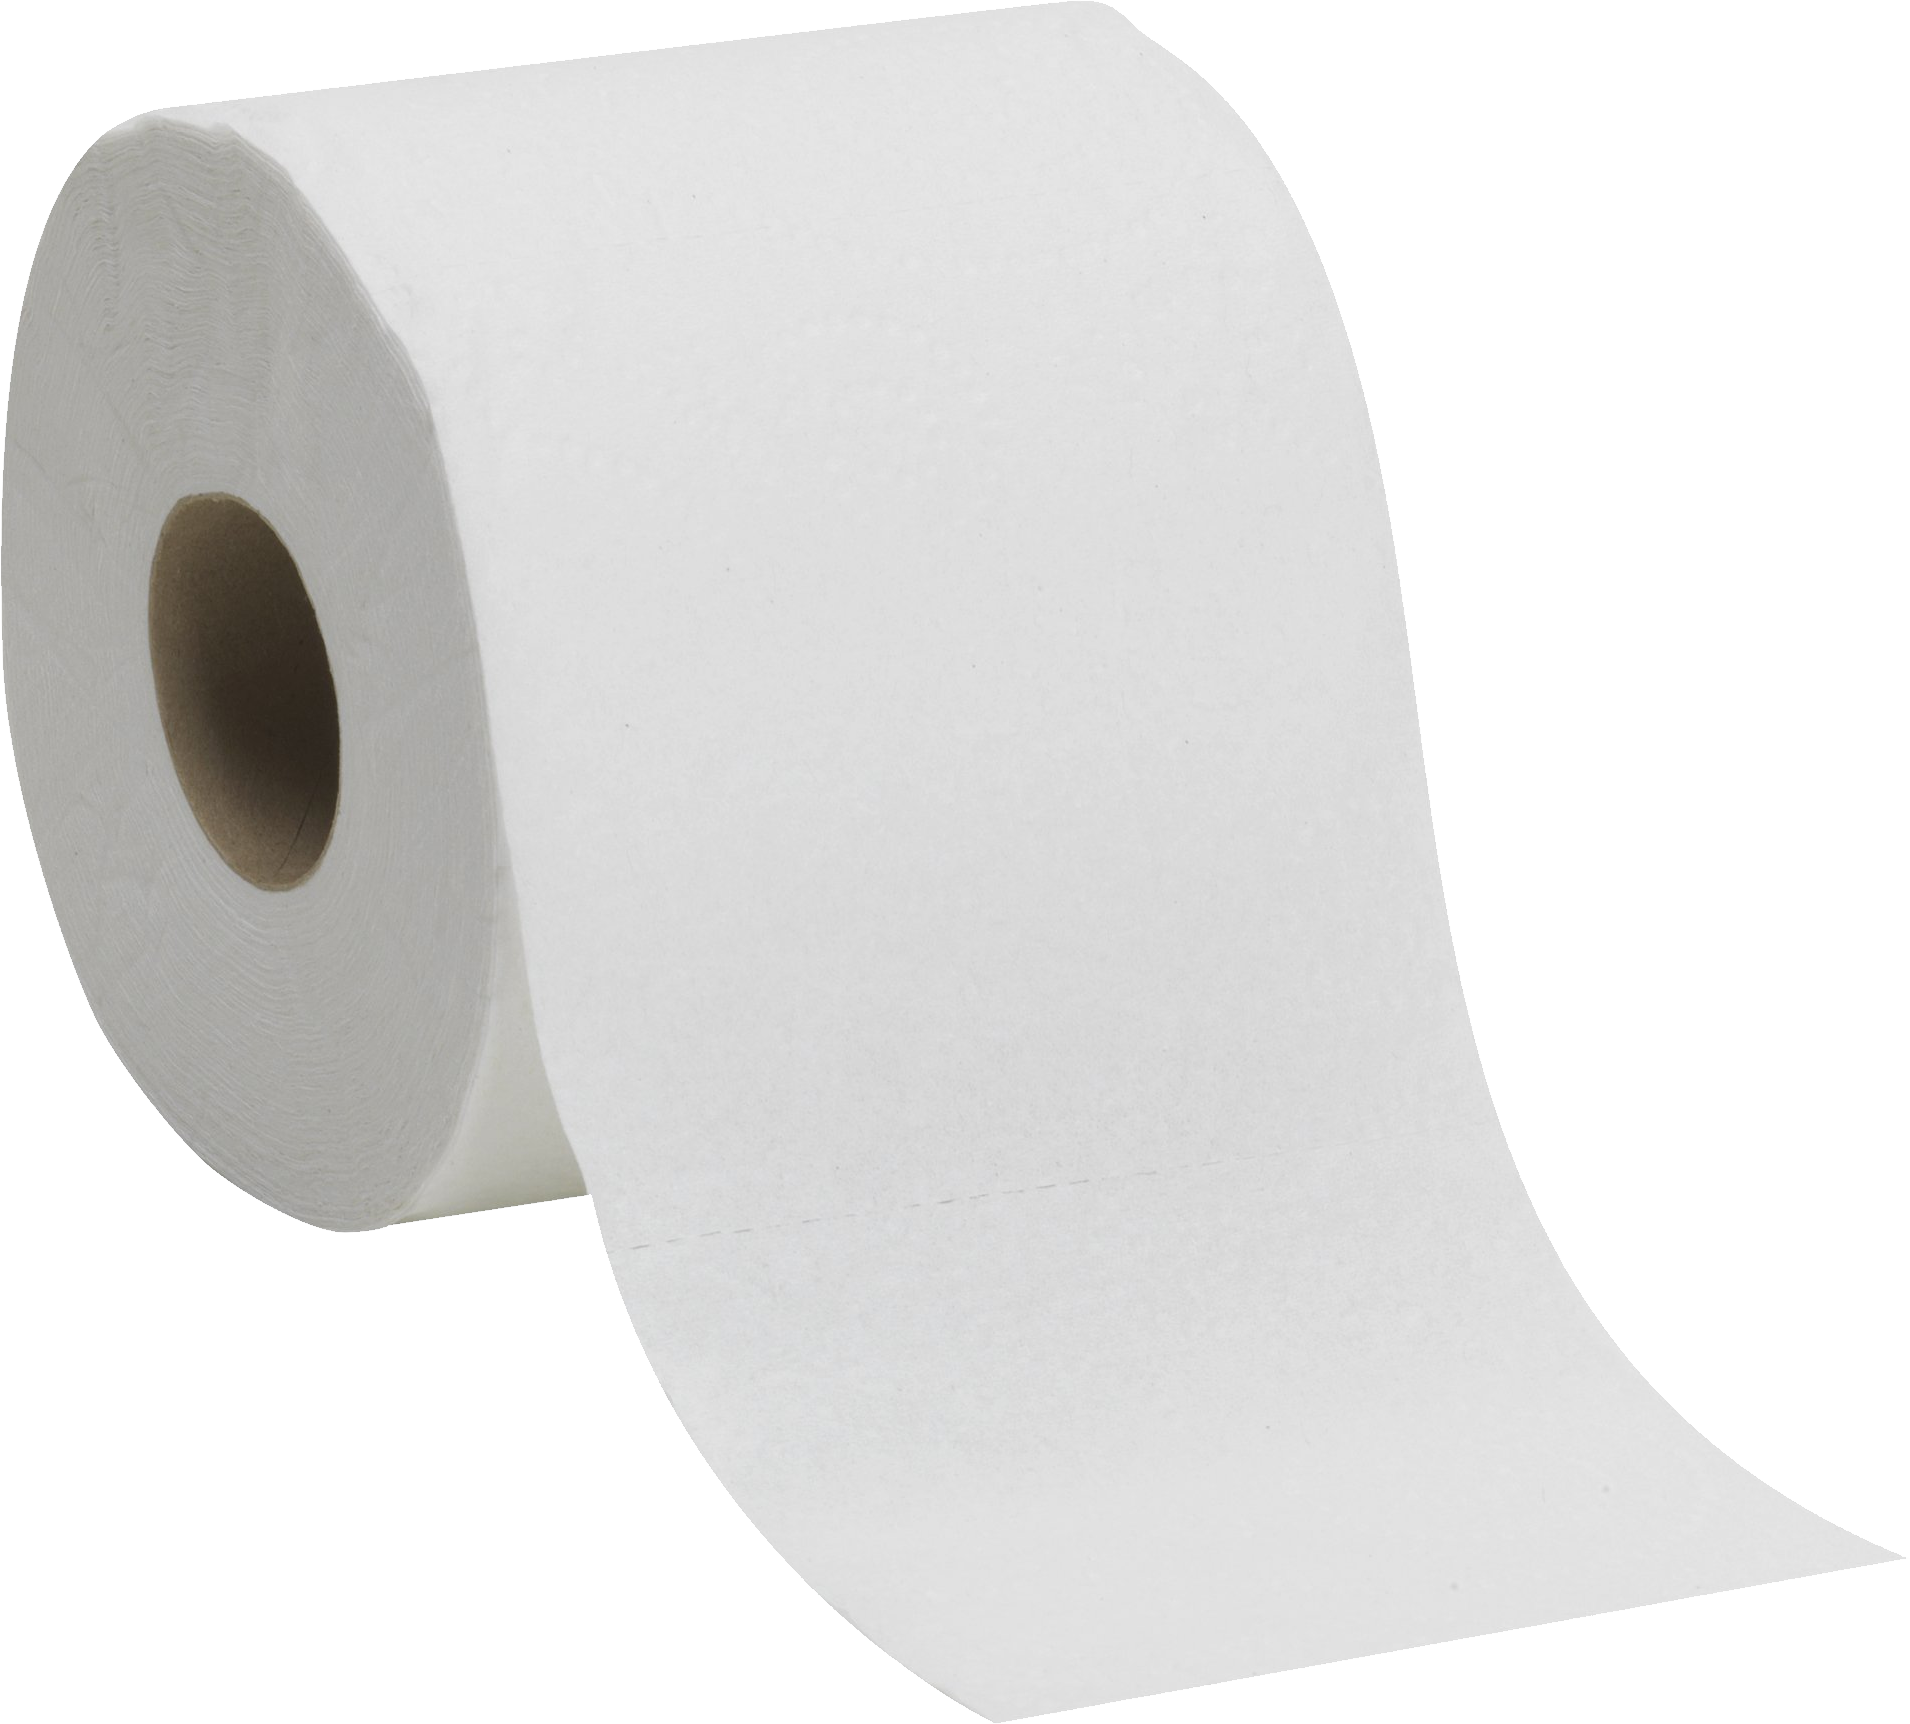 Toilet Paper PNG HD - 123053